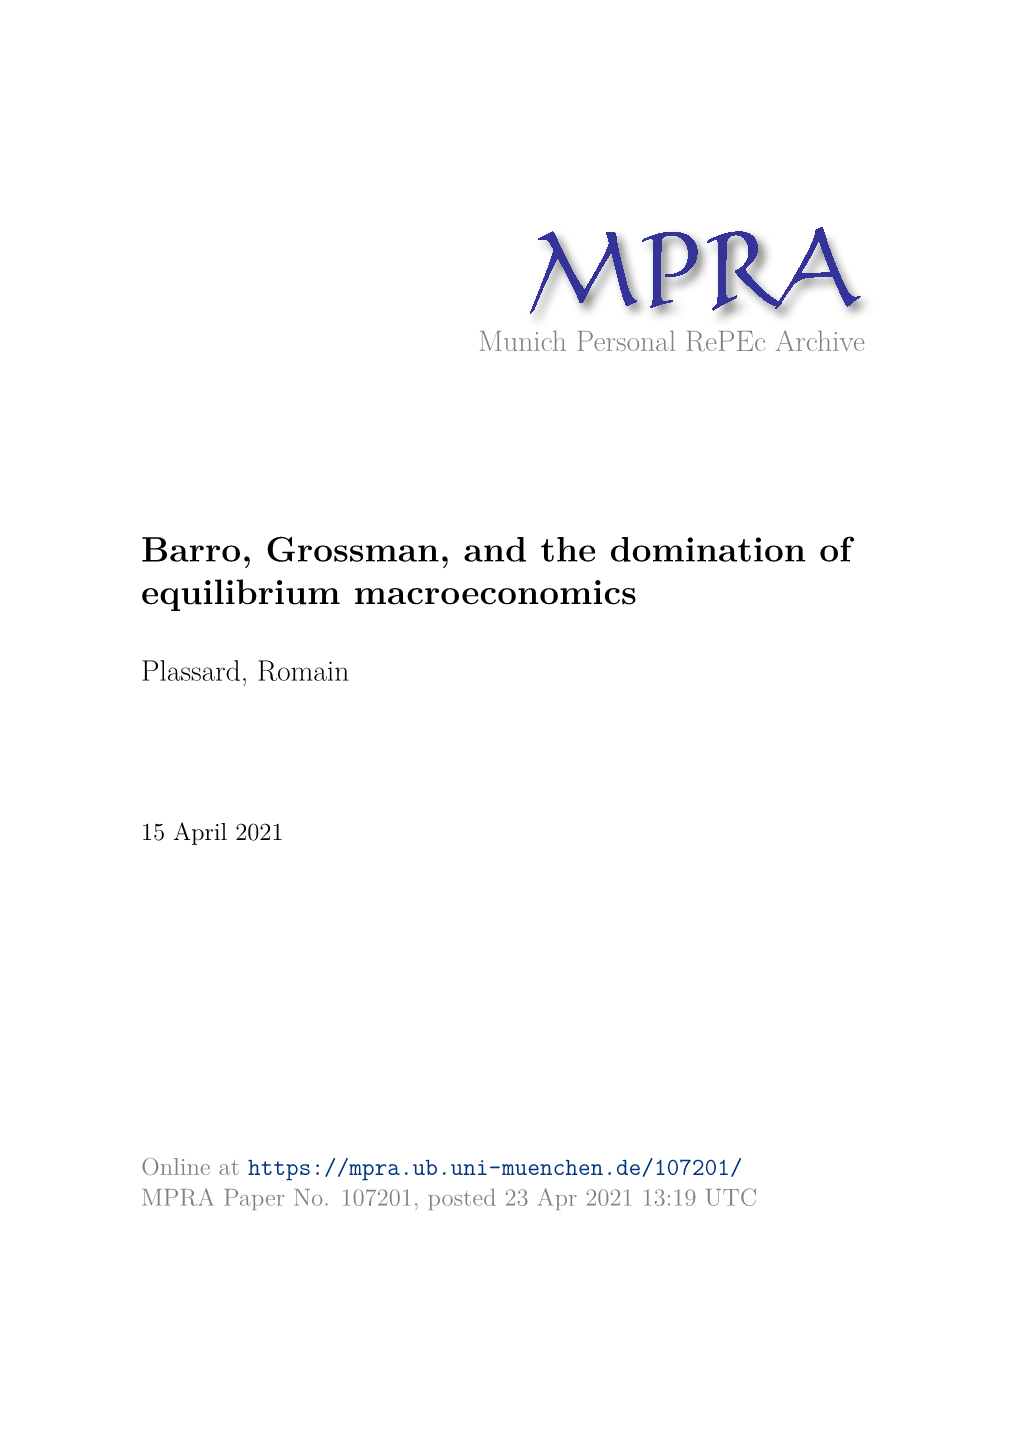 Barro, Grossman, and the Domination of Equilibrium Macroeconomics